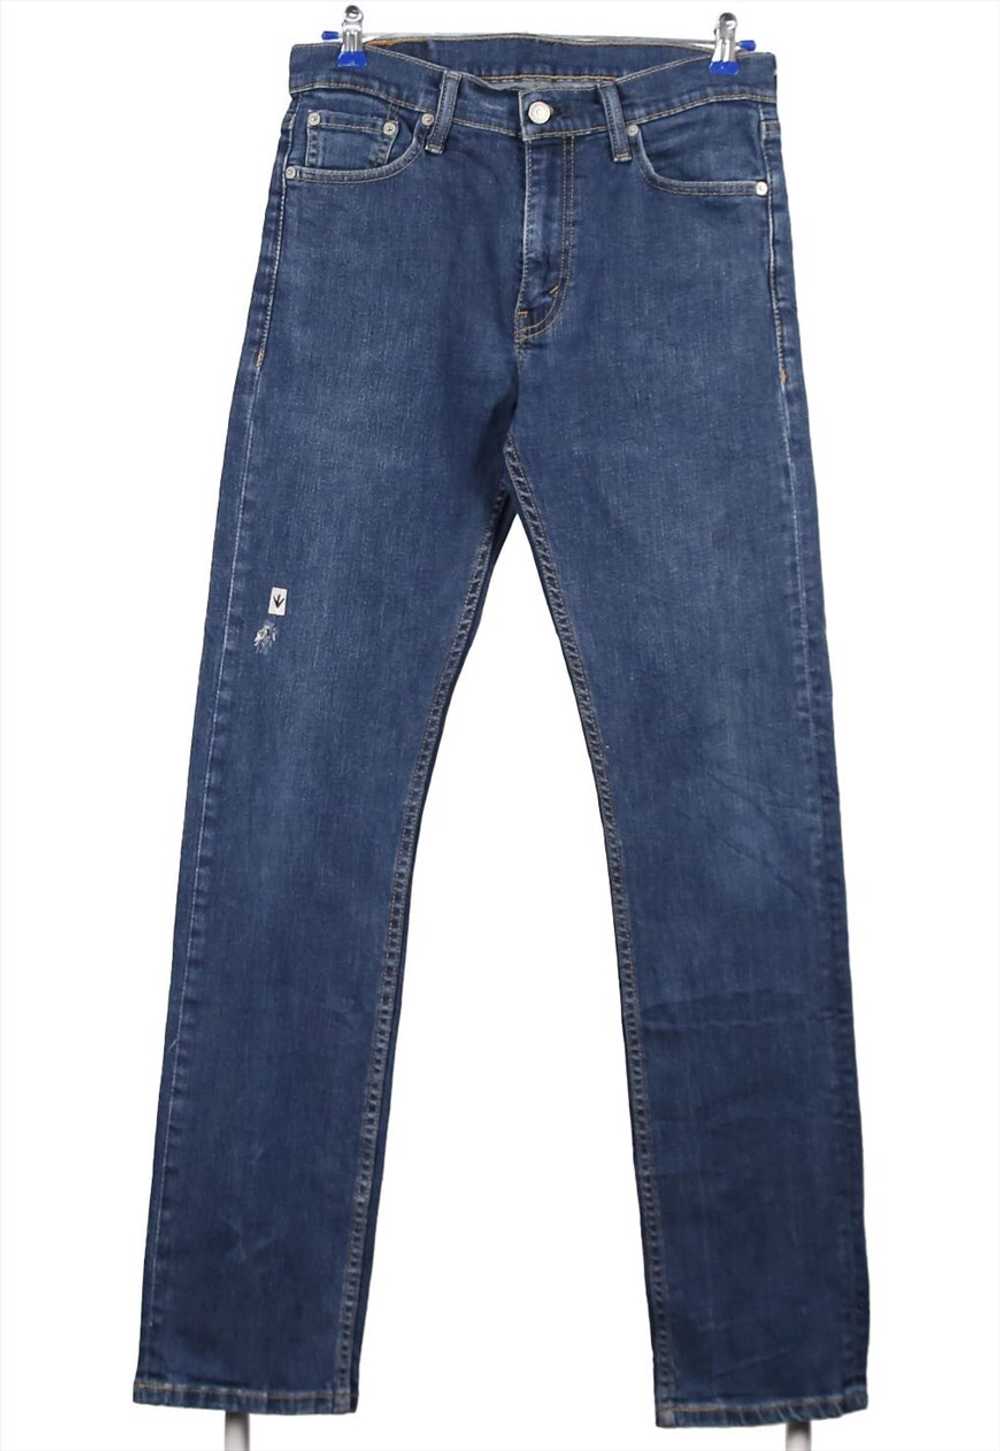 Vintage 90's Levi Strauss & Co. Jeans / Pants 513… - image 2